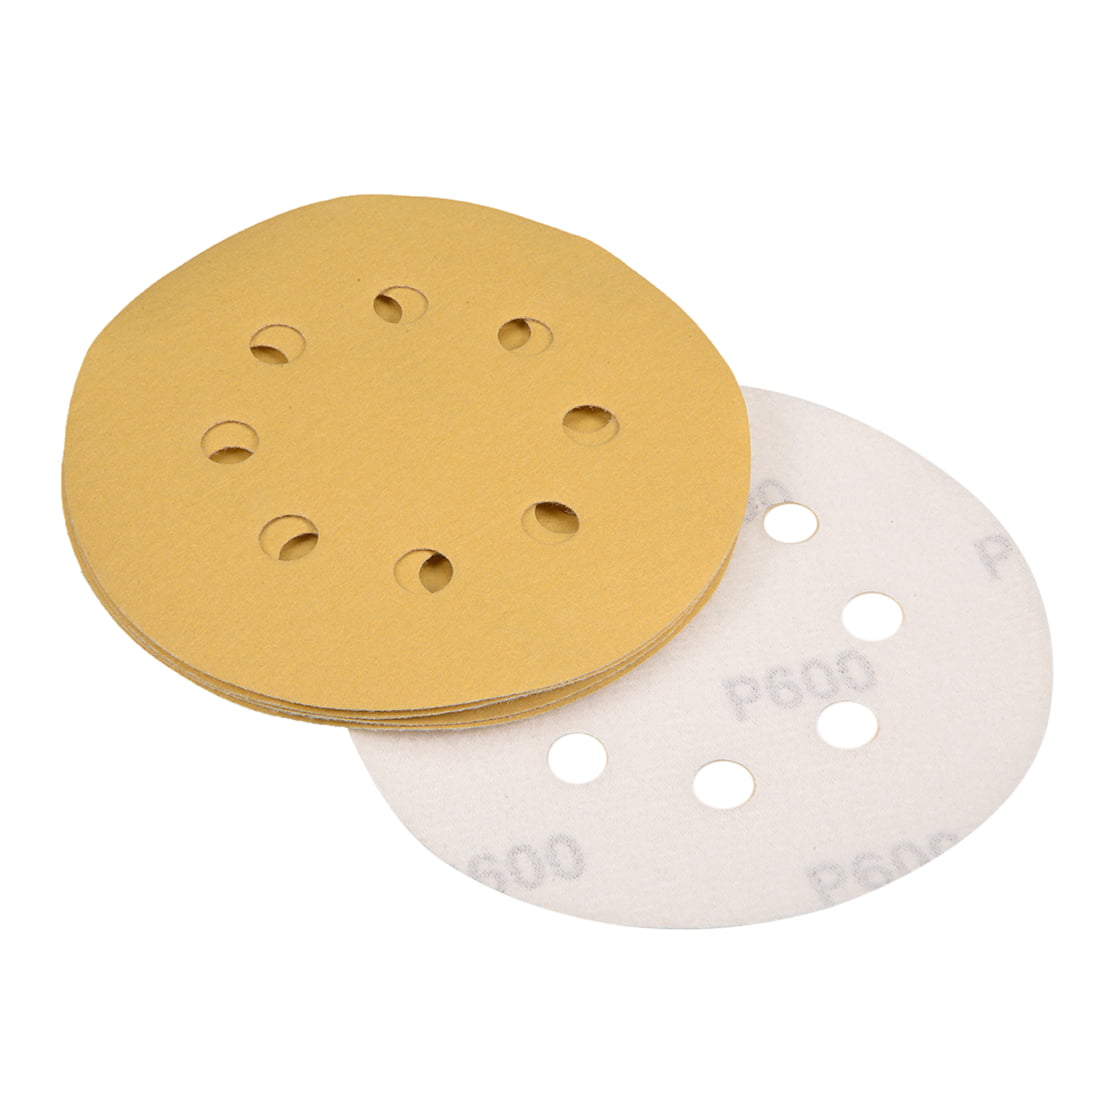 5 Inch 8 Hole 1000 Grit Hook and Loop Sanding Discs Wet Dry Sandpaper 5pcs 